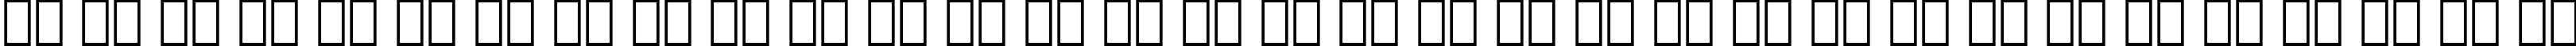 Пример написания русского алфавита шрифтом Geometric 231 Heavy BT